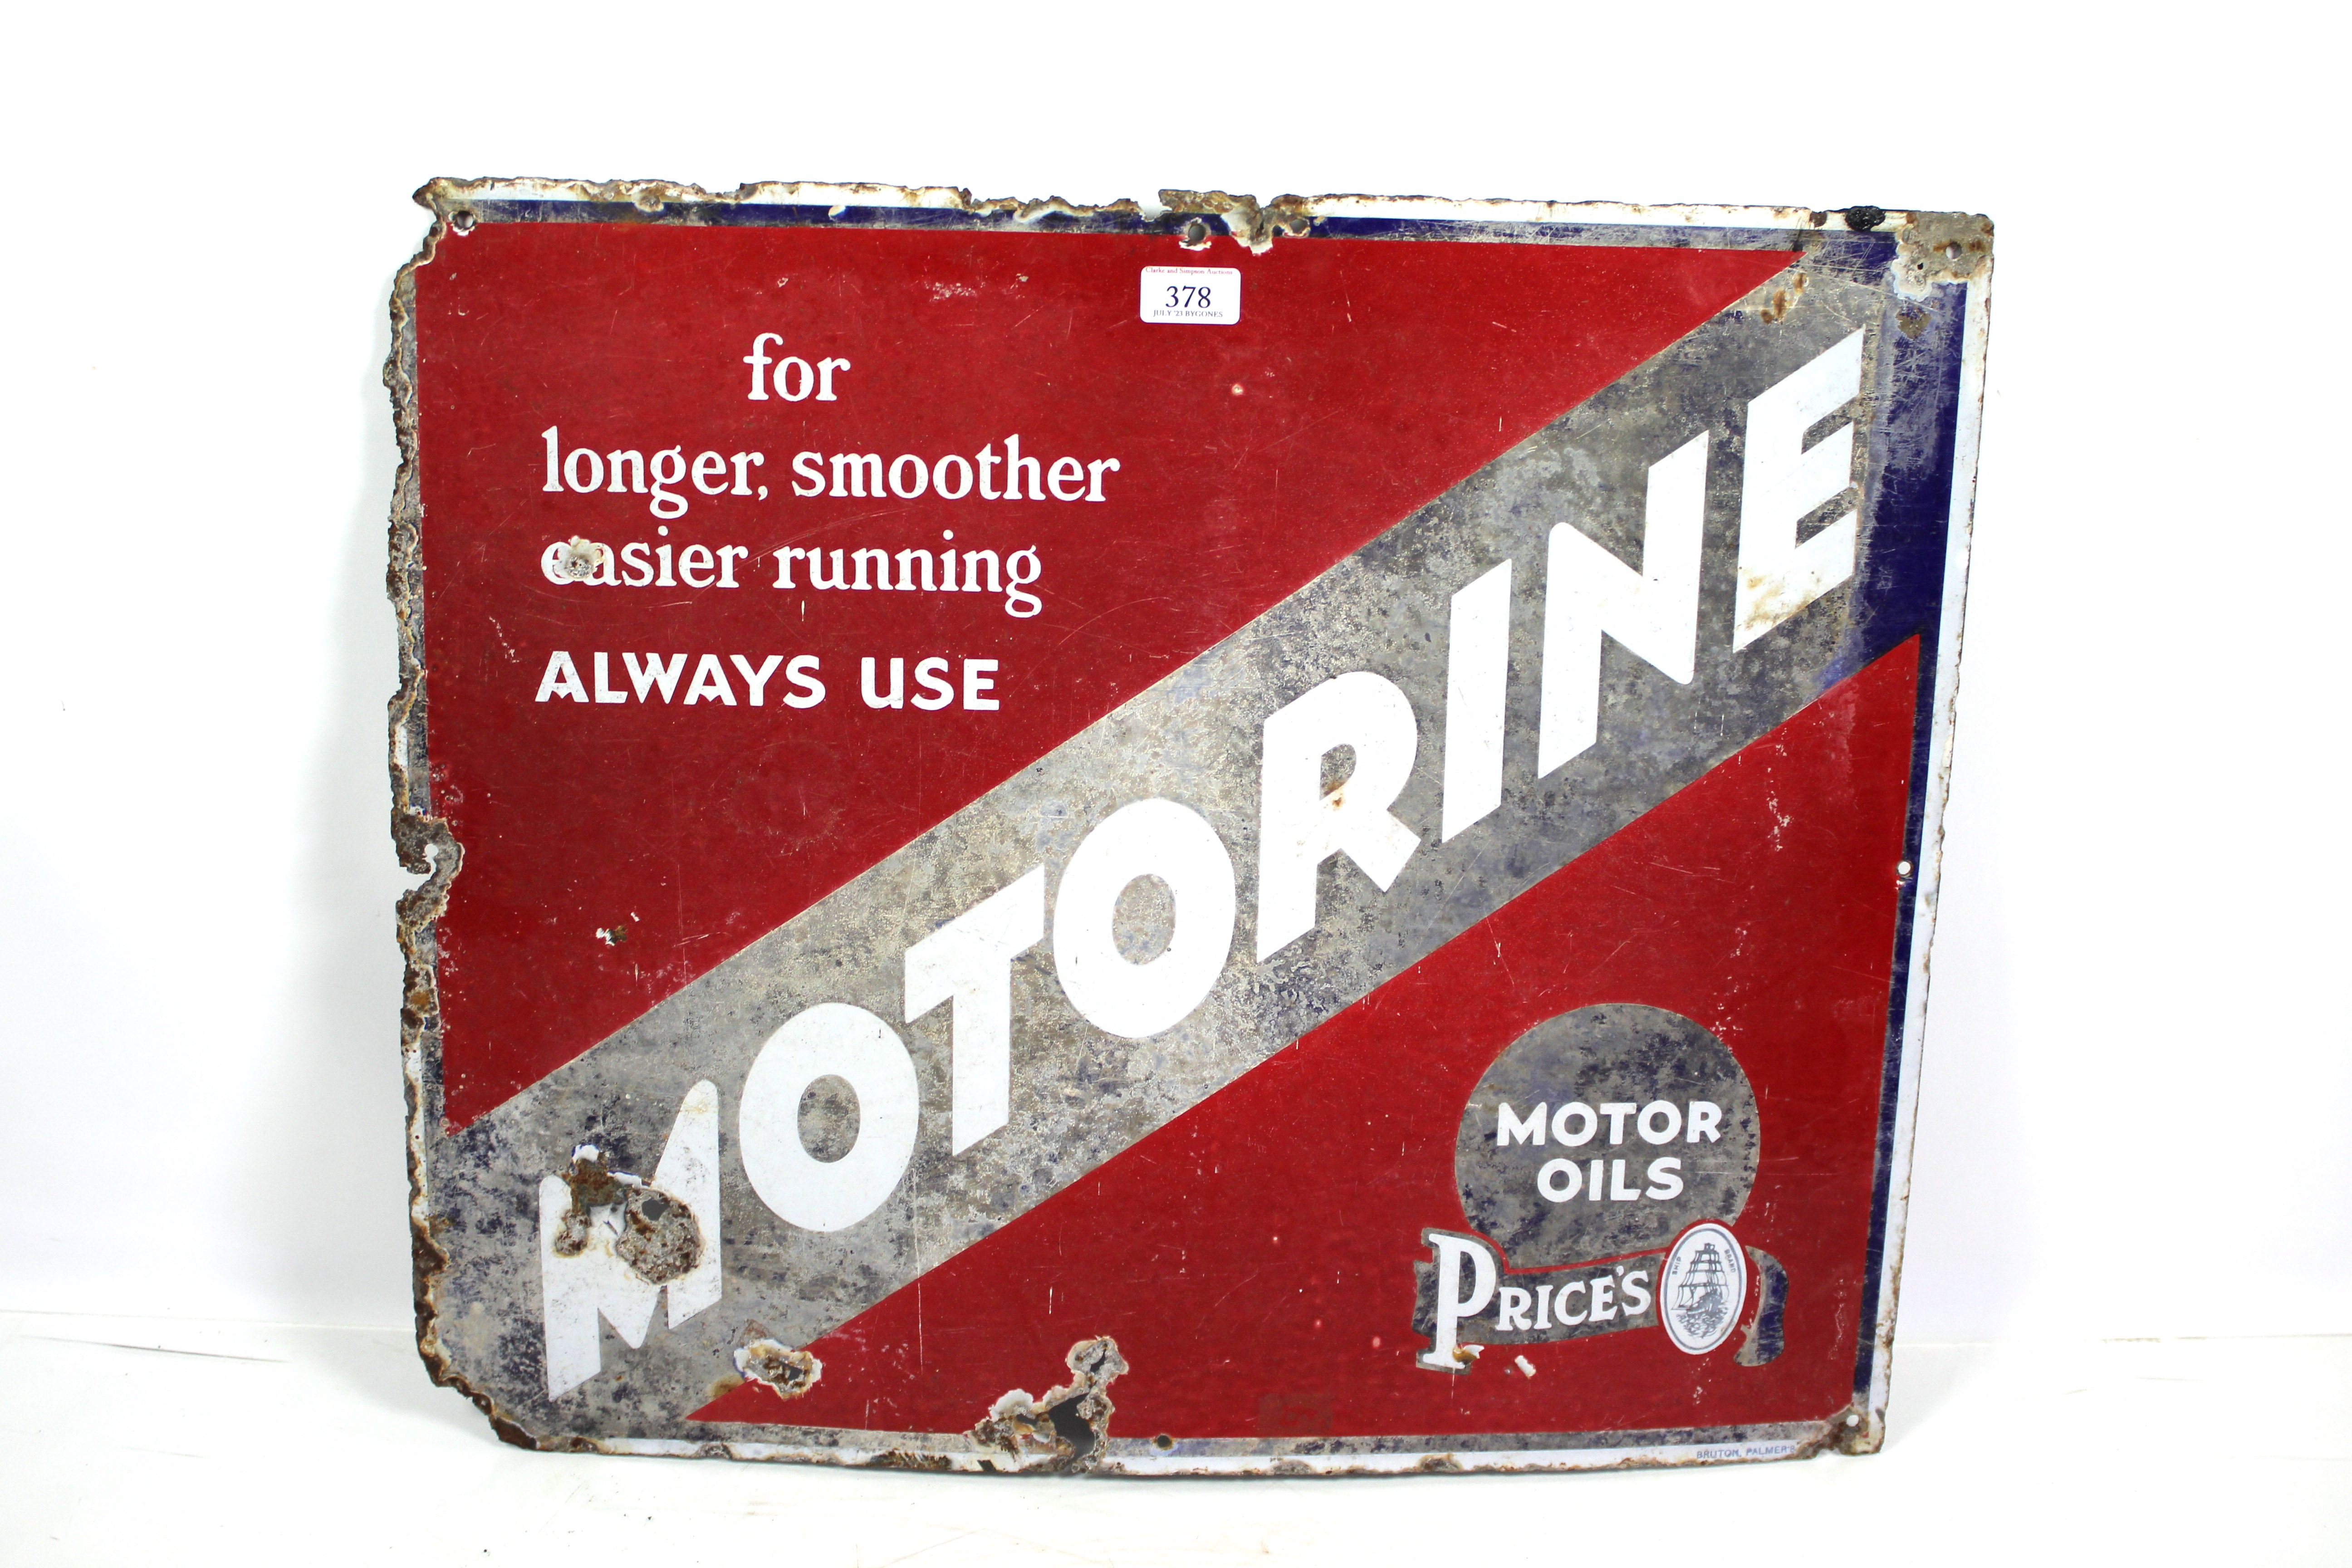 An vintage enamel advertising sign for "Motorine M